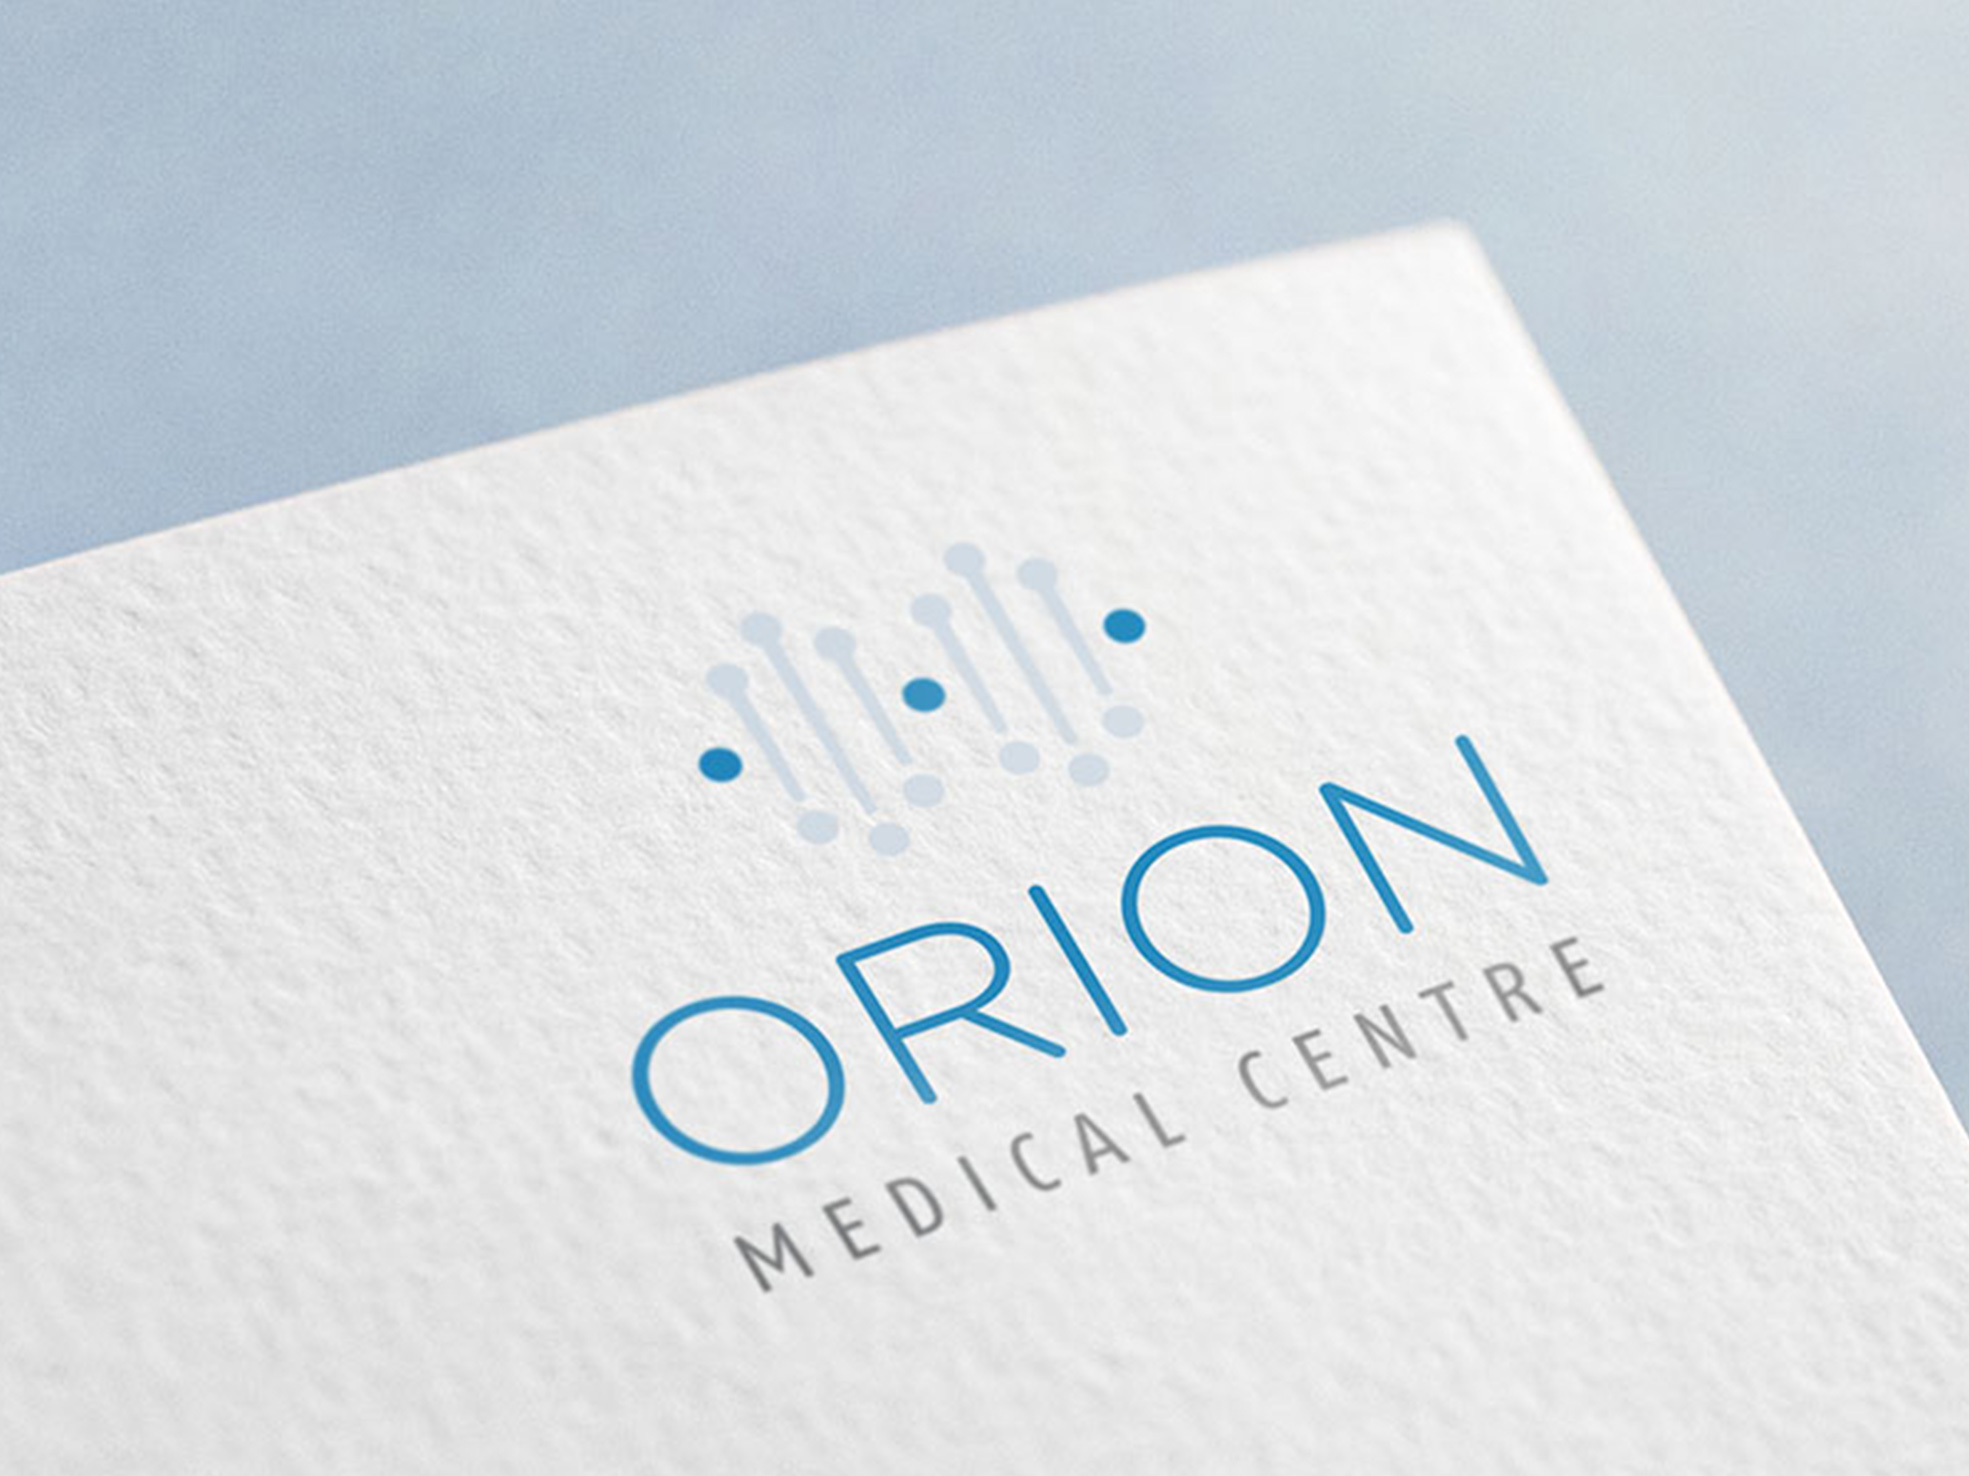 Orion Medical Centre